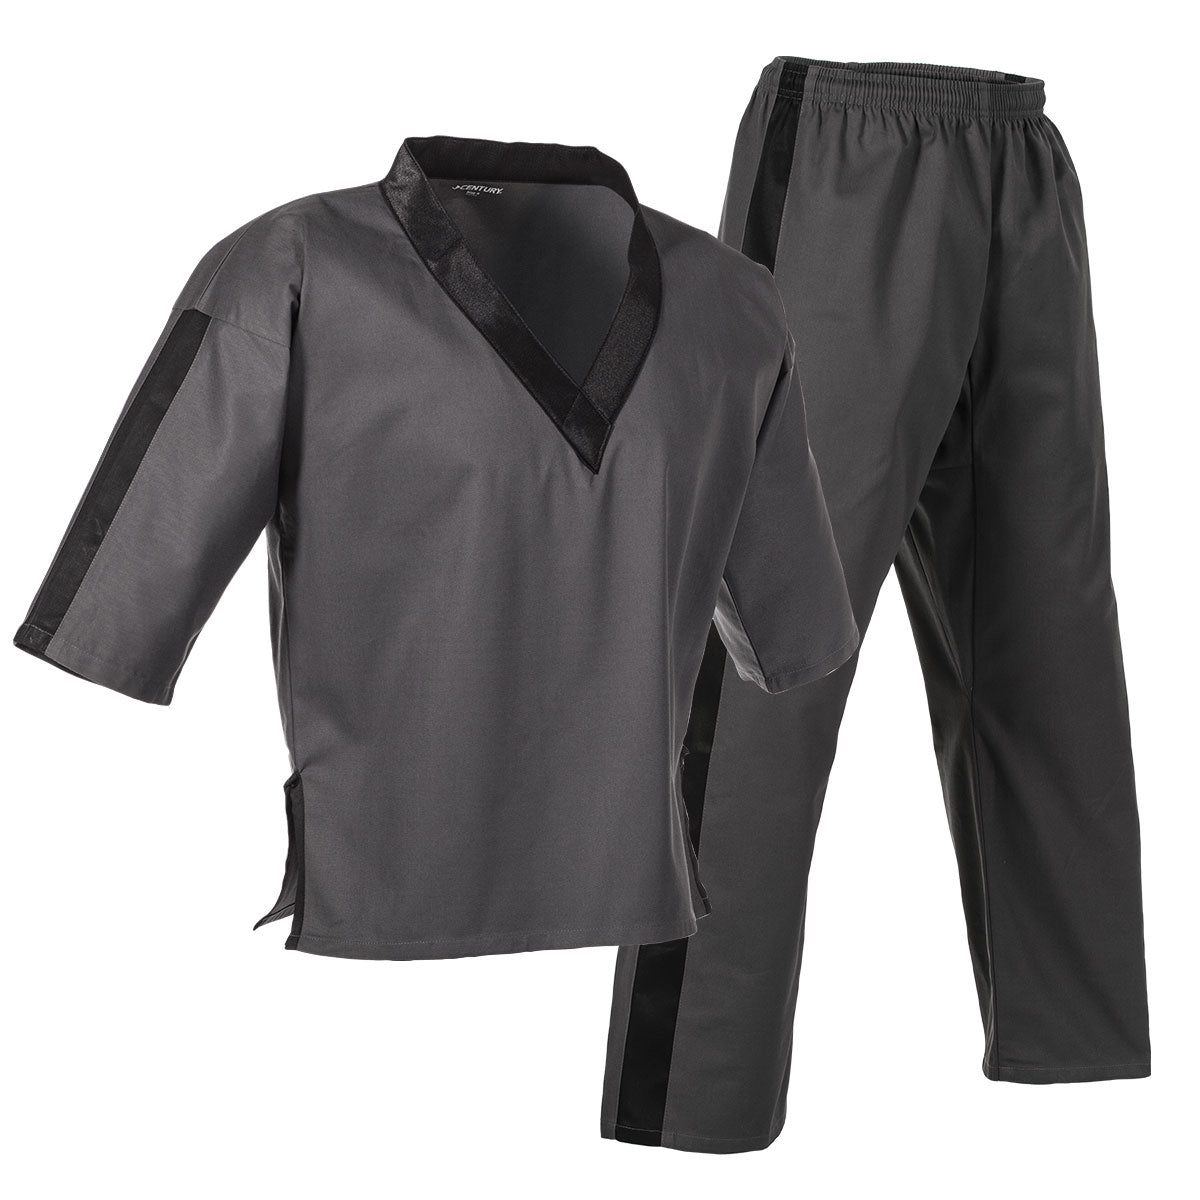 Level I Pullover Program Uniform 6 Grey/Black